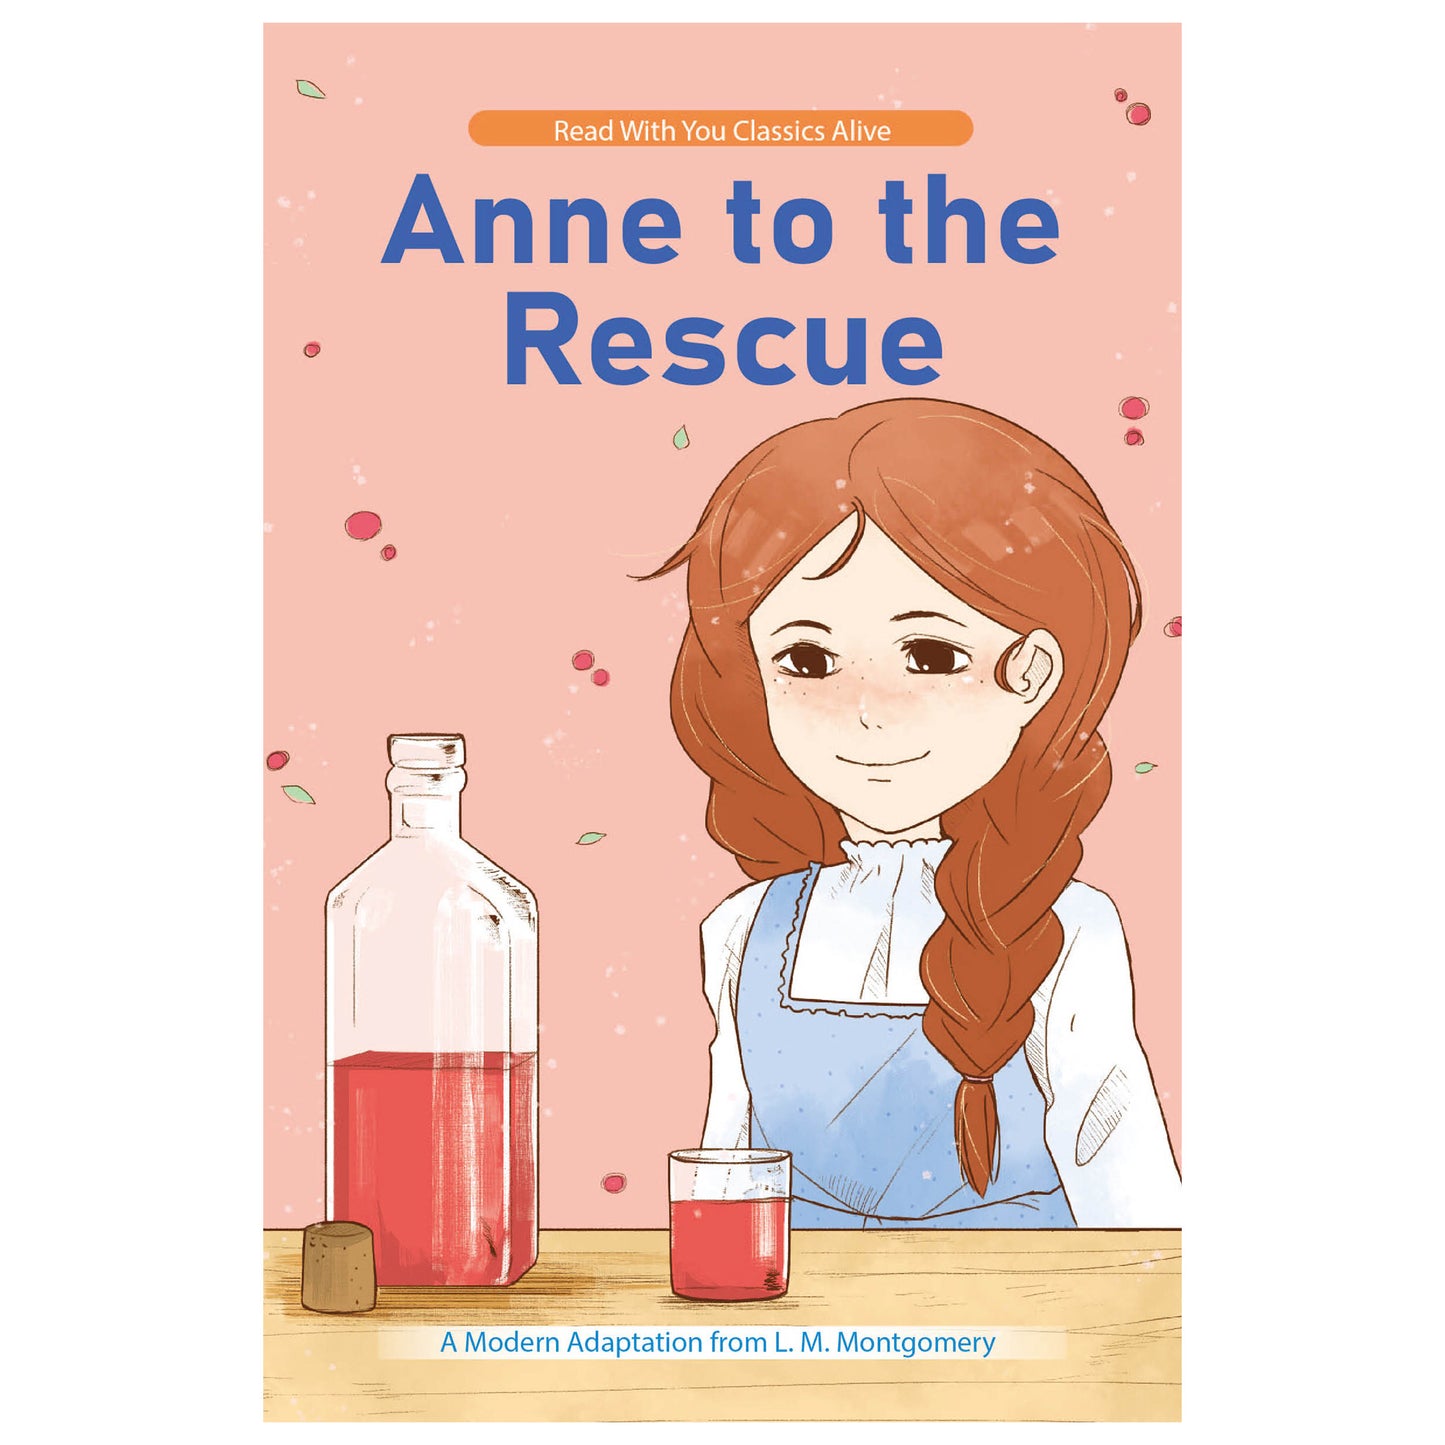 Anne to the Rescue